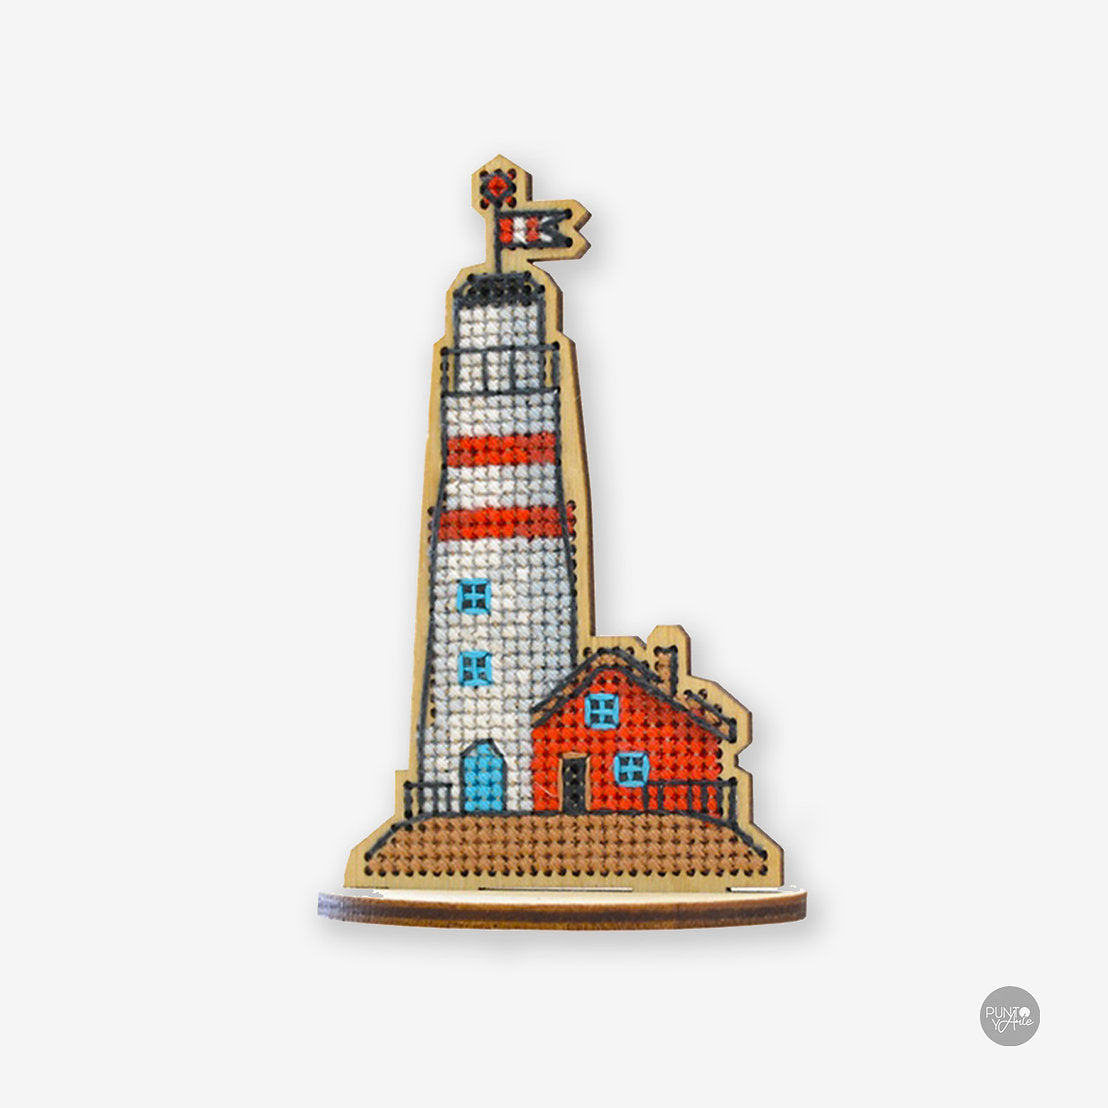 Lighthouse. Standing beacon - 1194 OVEN - Cross stitch kit